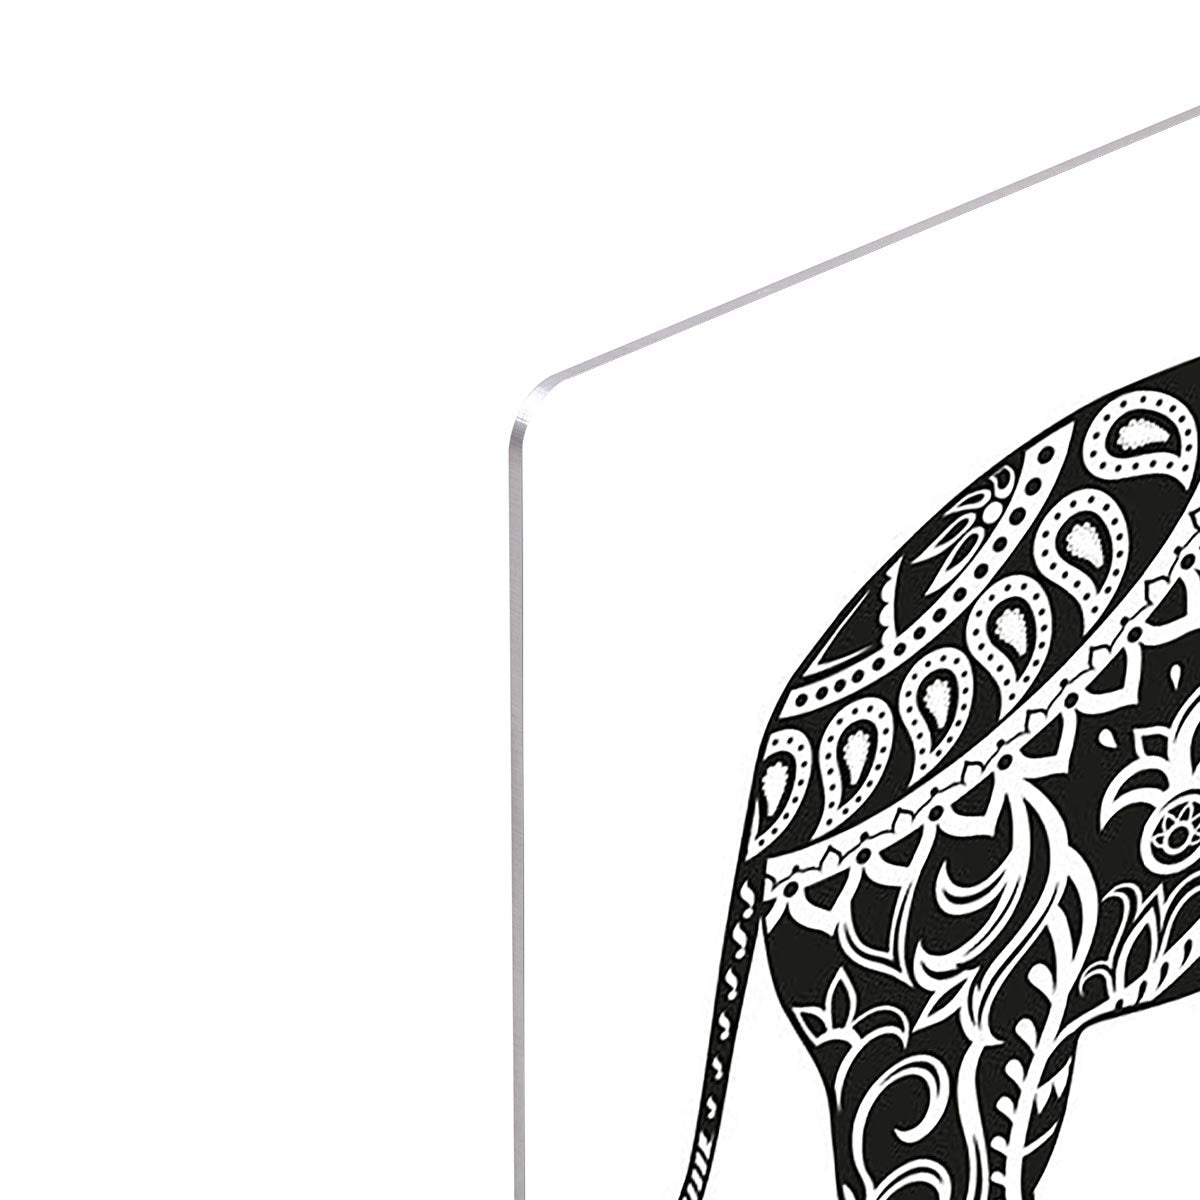 The stylized figure of an elephant in the festive patterns HD Metal Print - Canvas Art Rocks - 4